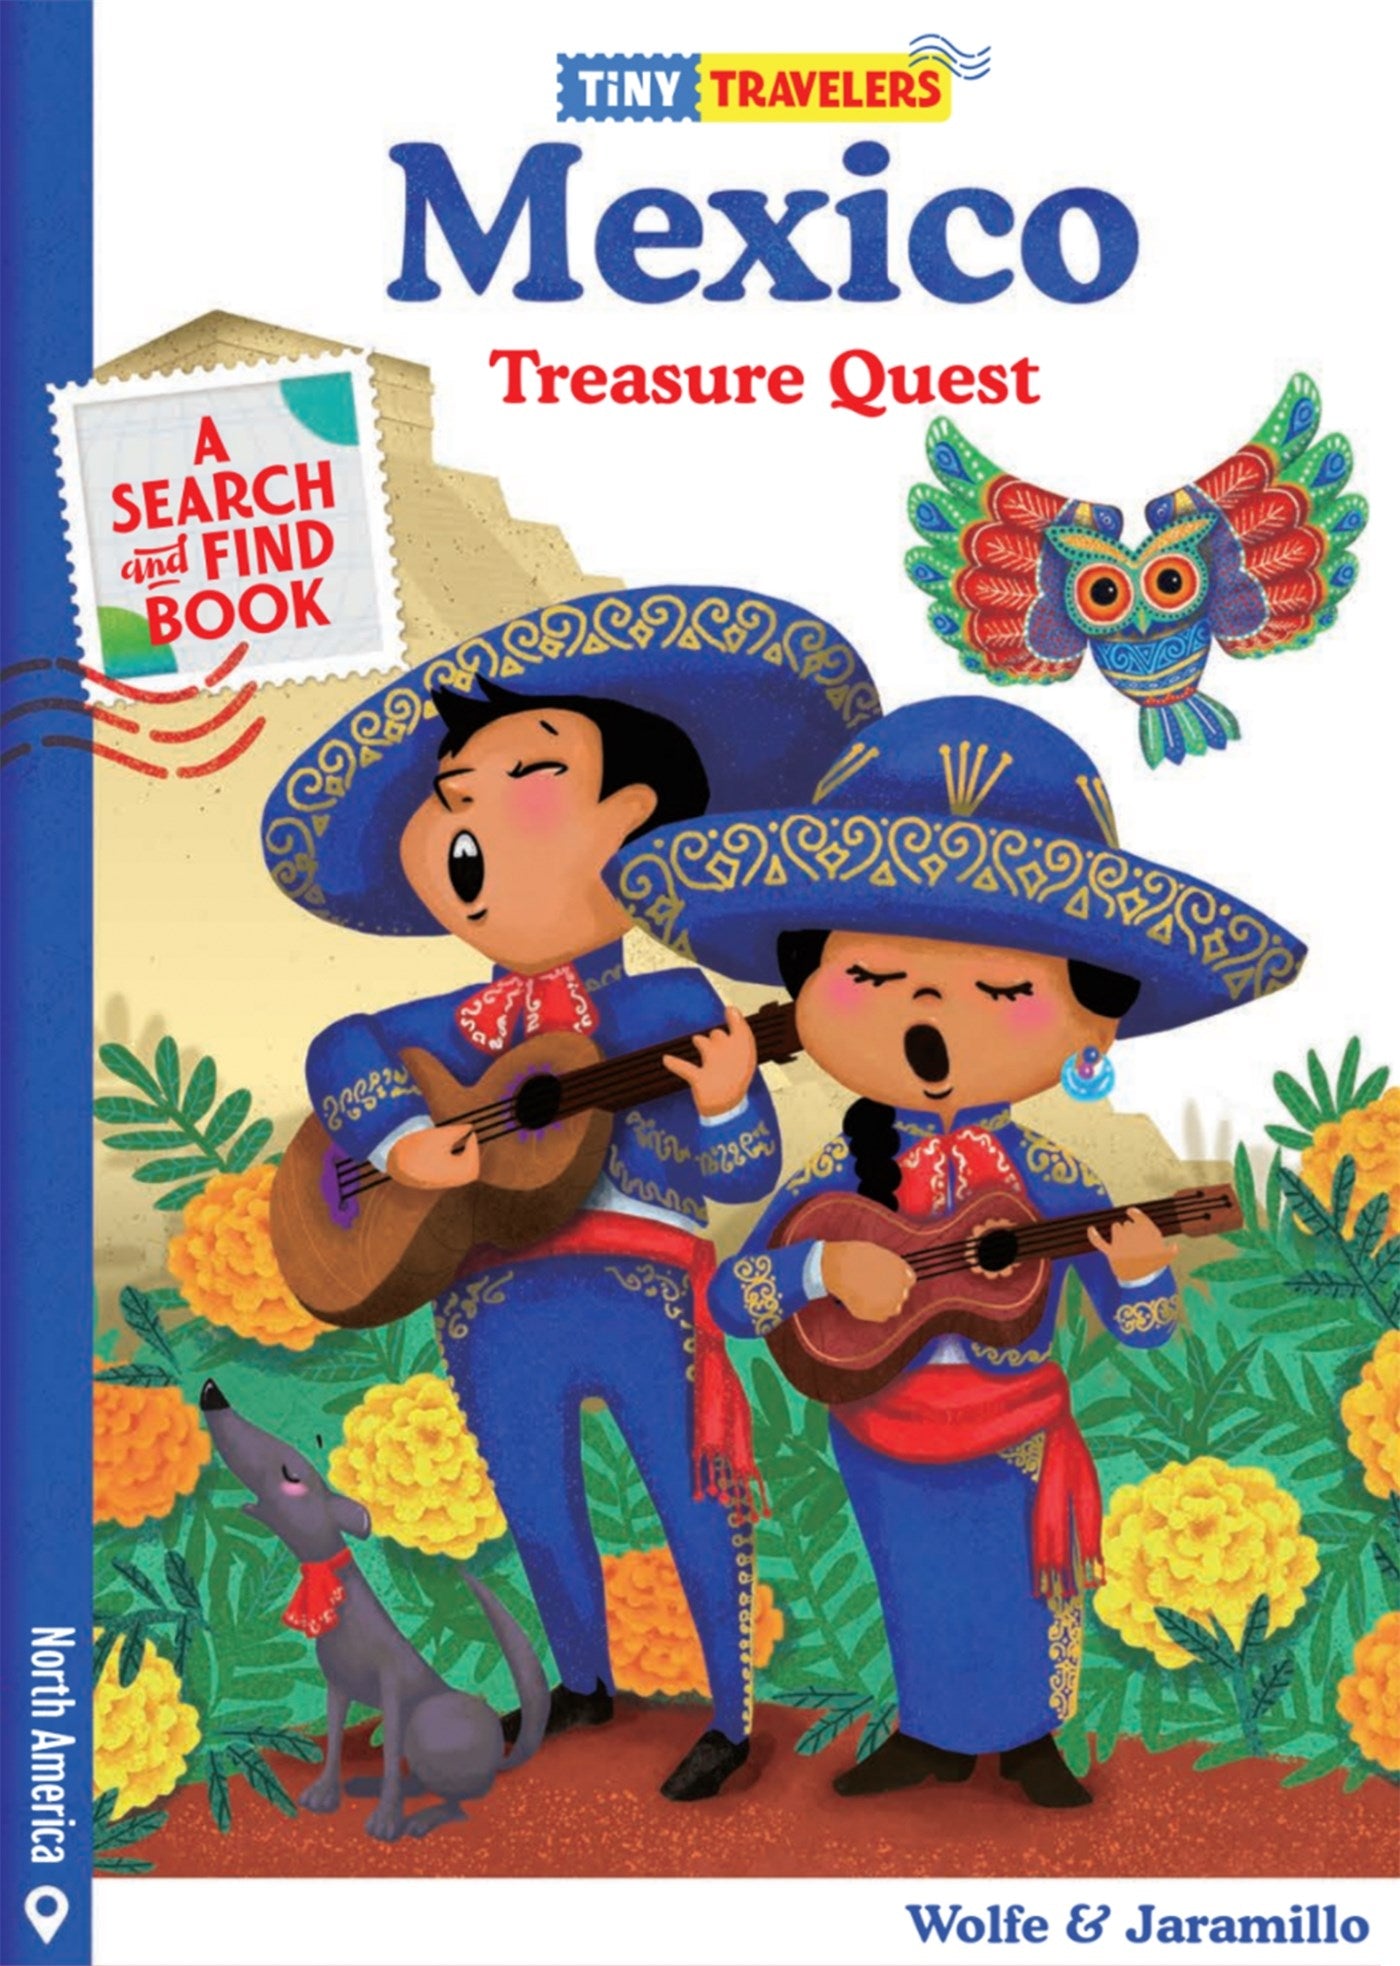 Tiny Travelers Mexico Treasure Quest: Treasure Quest